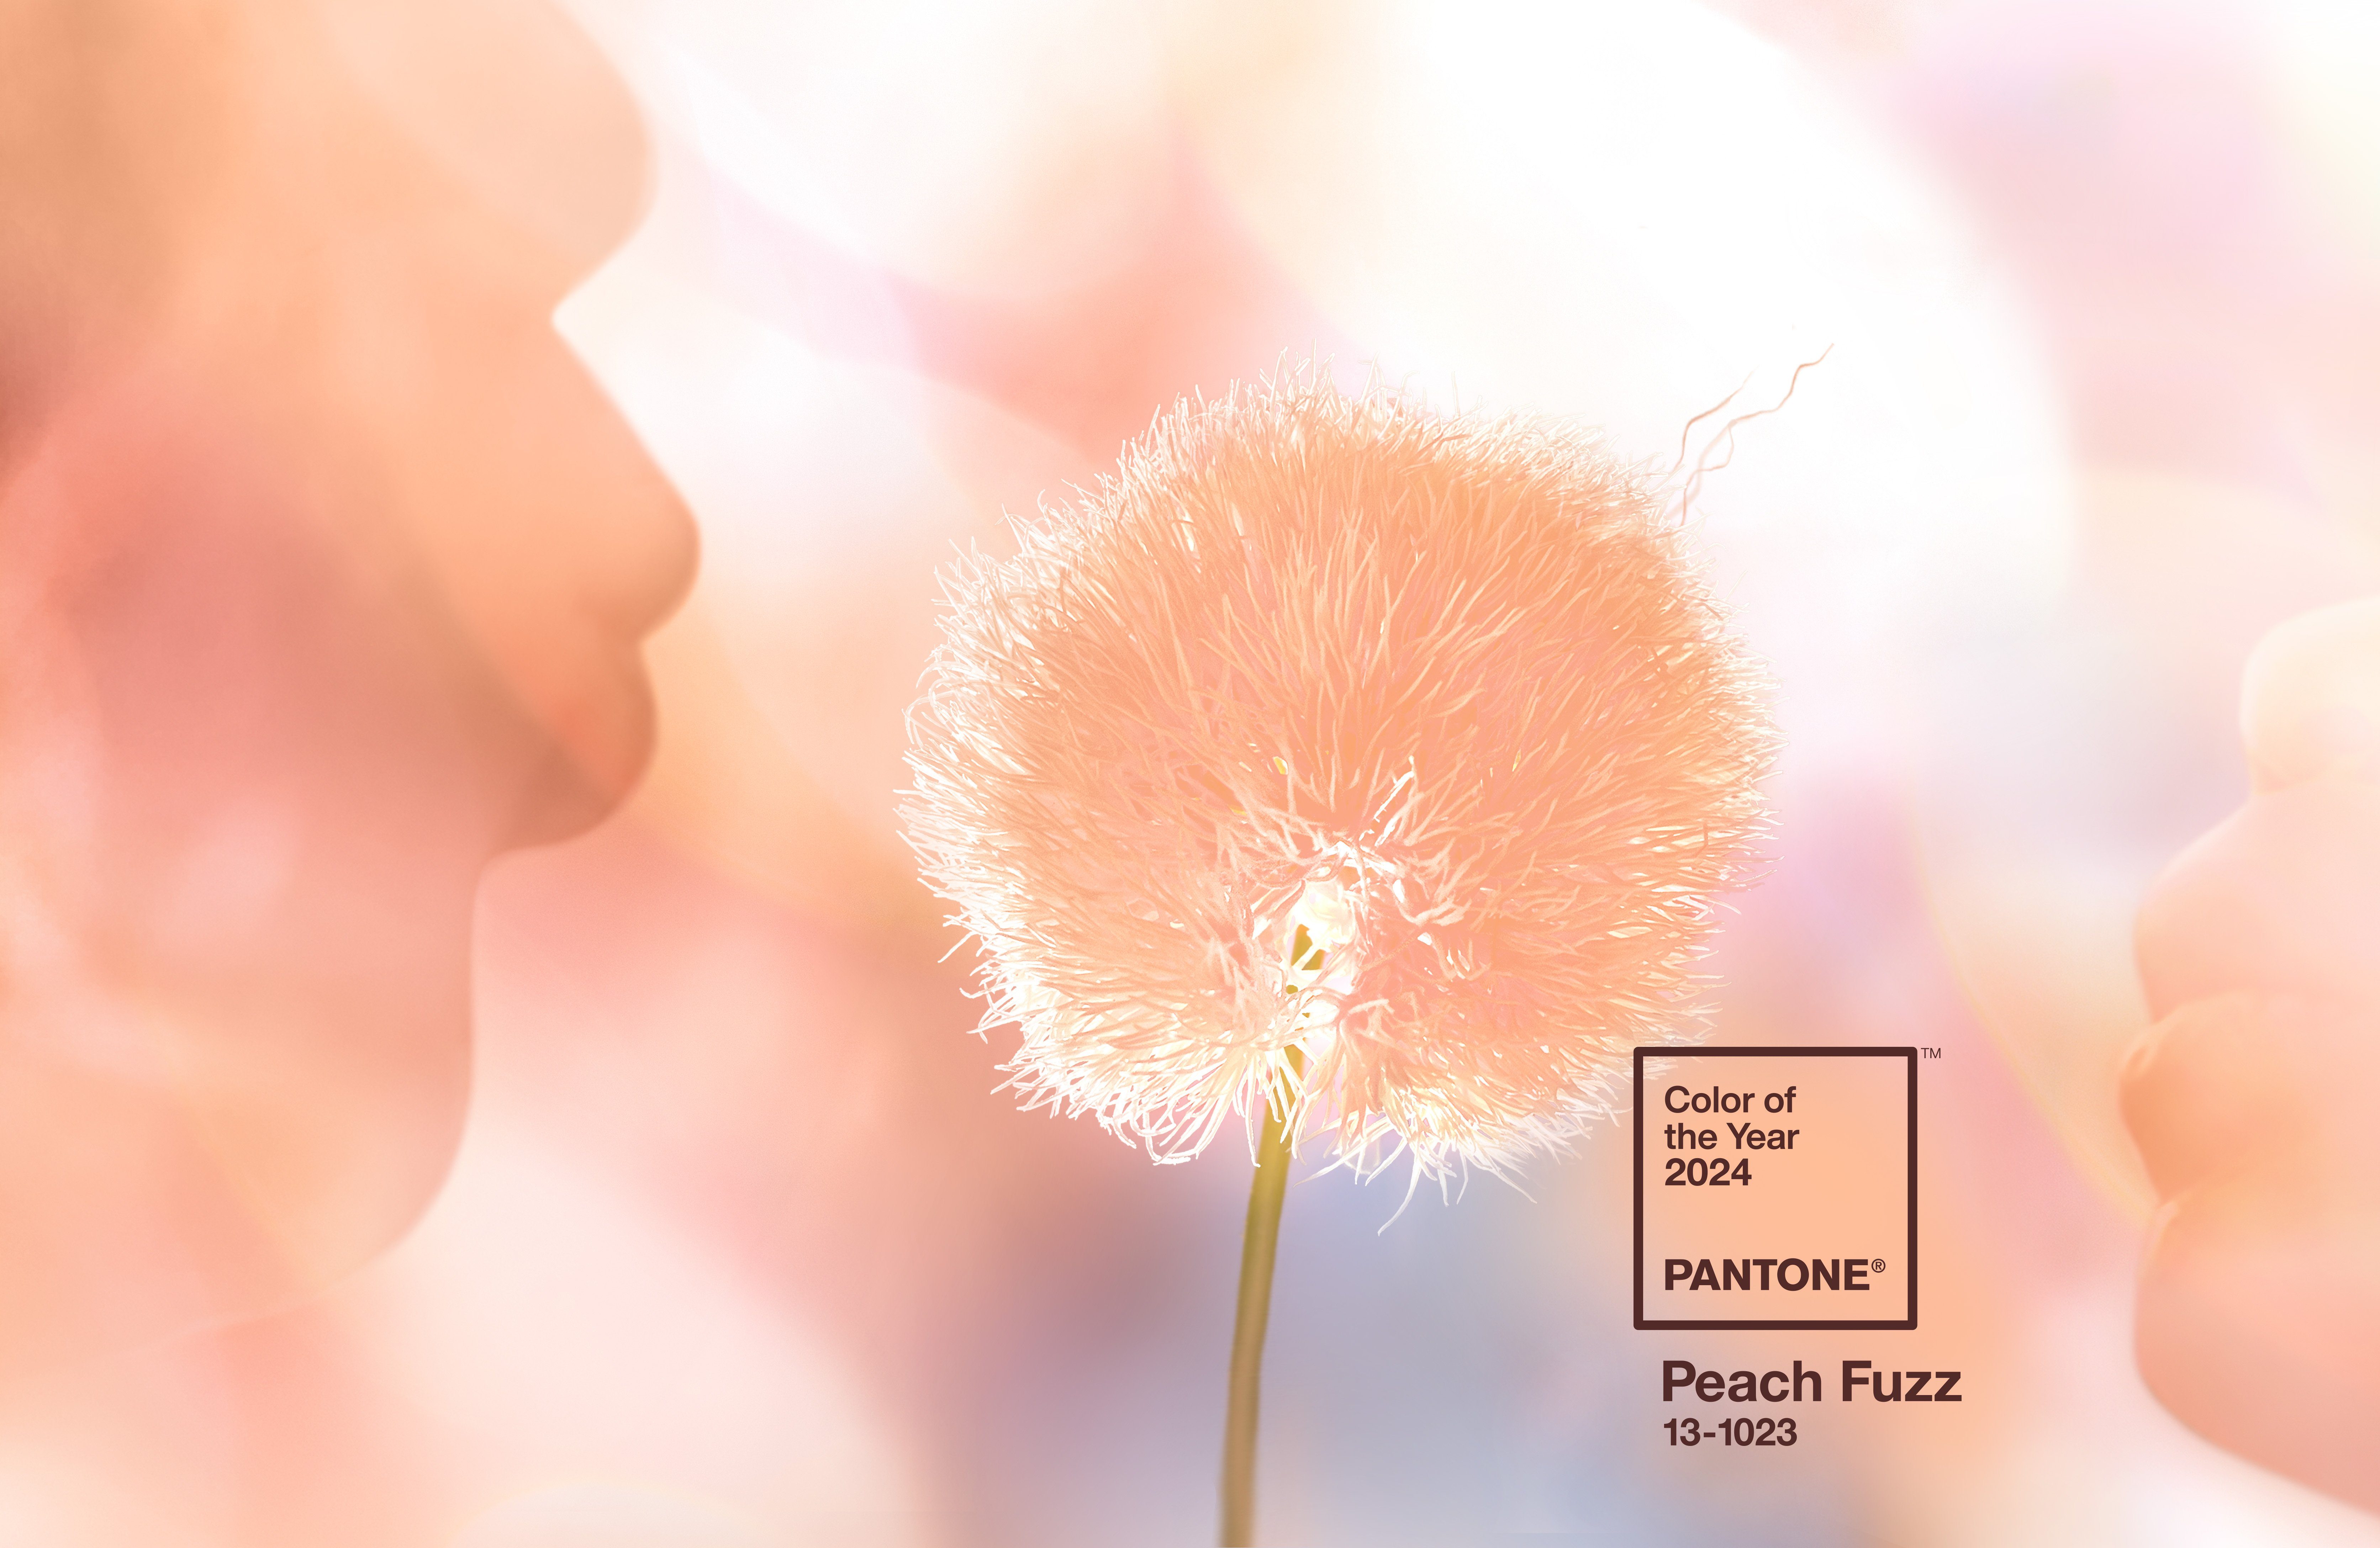 13-1023, Fuzz Peach 2024 doppelwandig,190ml des - 2024 Thermobecher Pantone PANTONE Farbe COY Jahres Kaffeeservice Cortado,